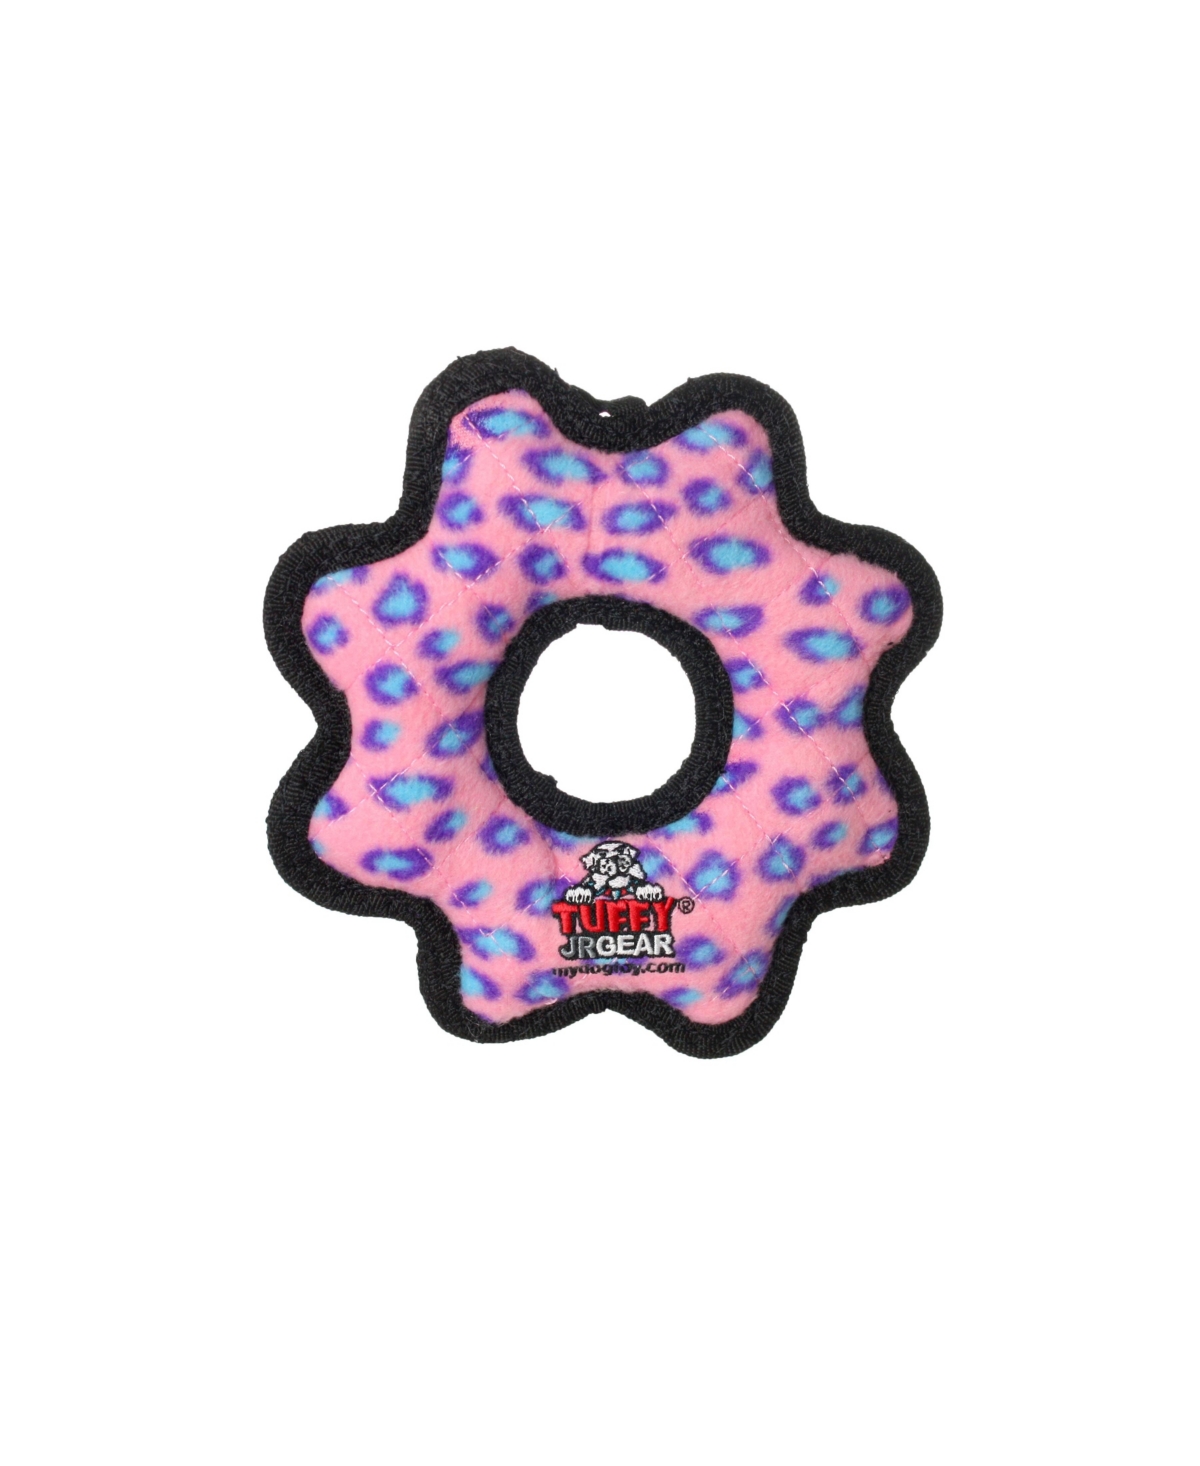 Jr Gear Ring Pink Leopard, Dog Toy - Medium Pink